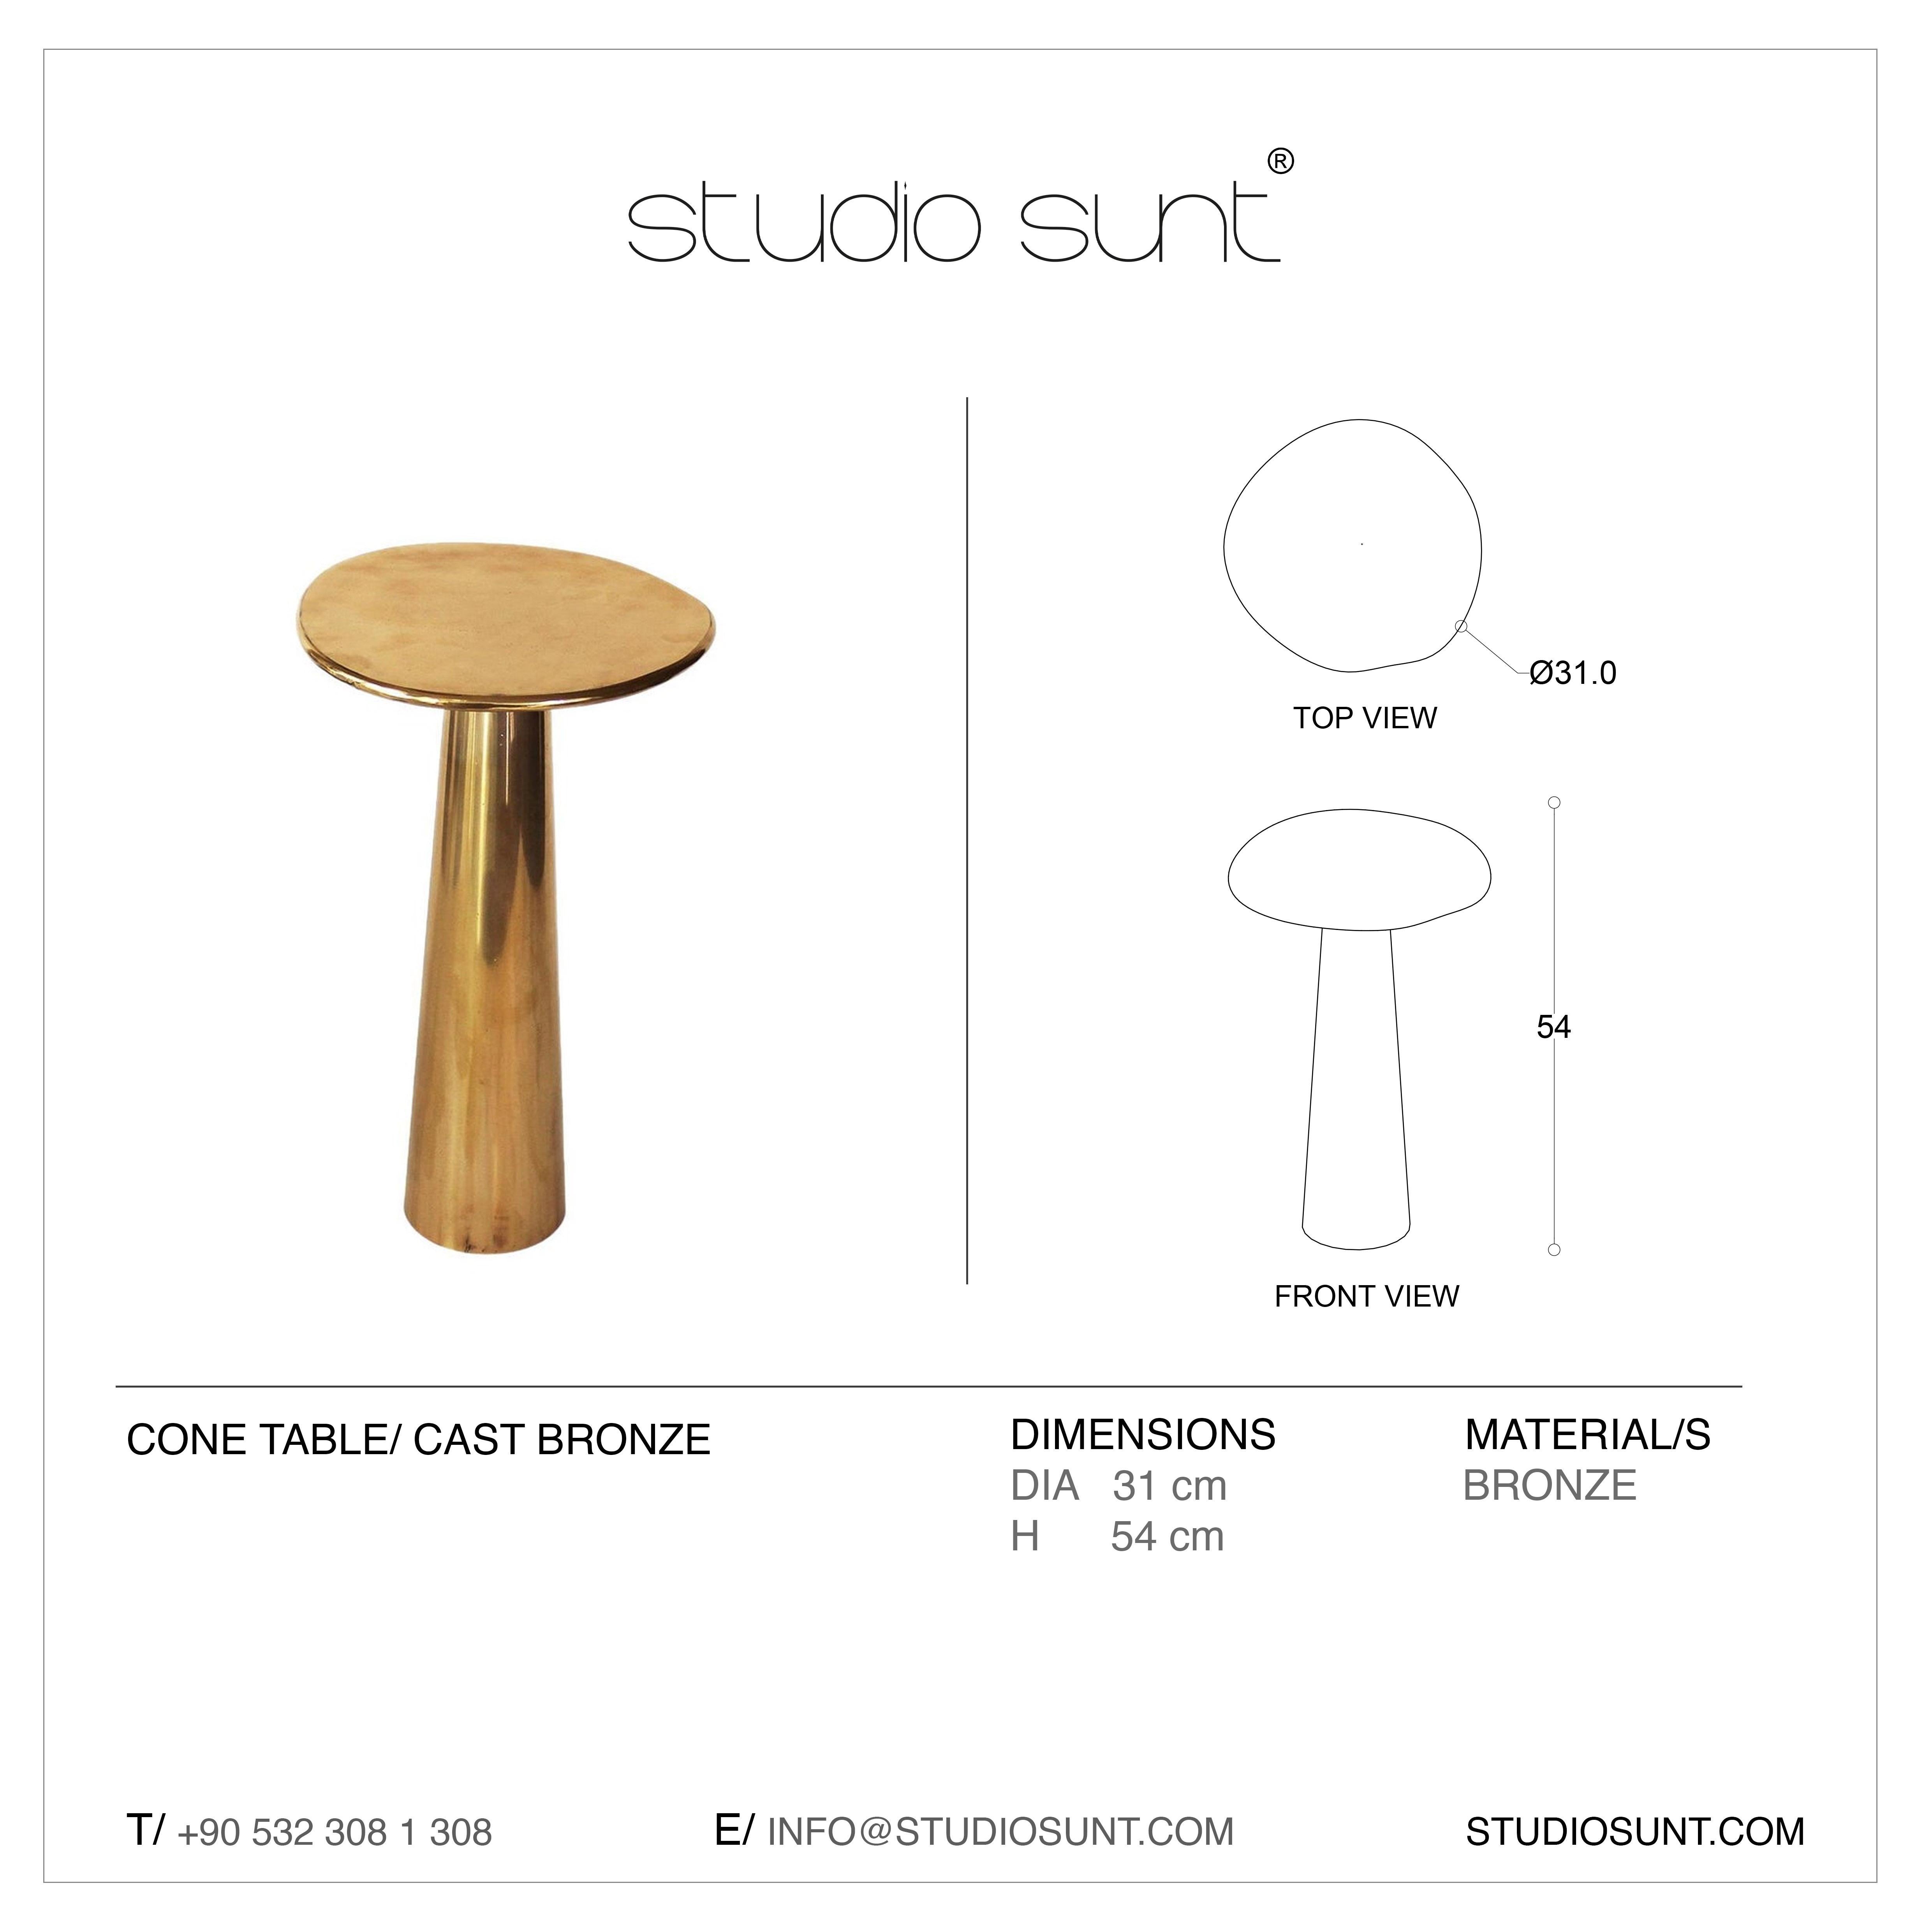 Cast Bronze Cone Side Table by Studio Sunt 9